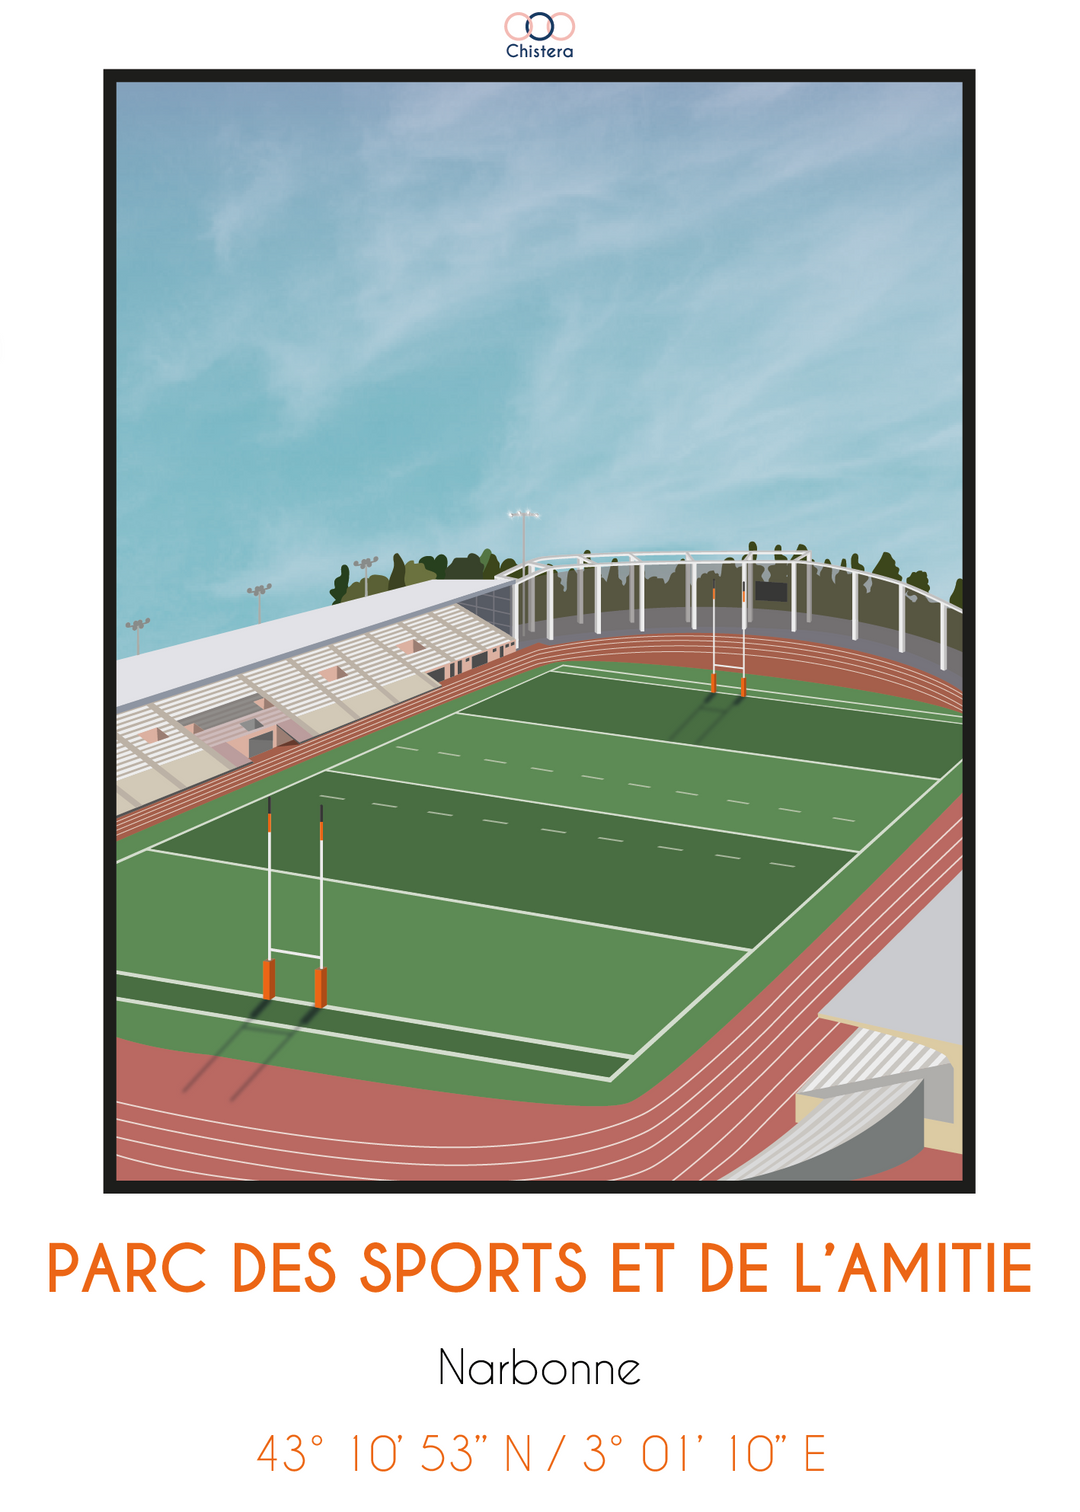 Affiche stade rugby Narbonne I Parc des sport de l'amitié I Affiche rugby